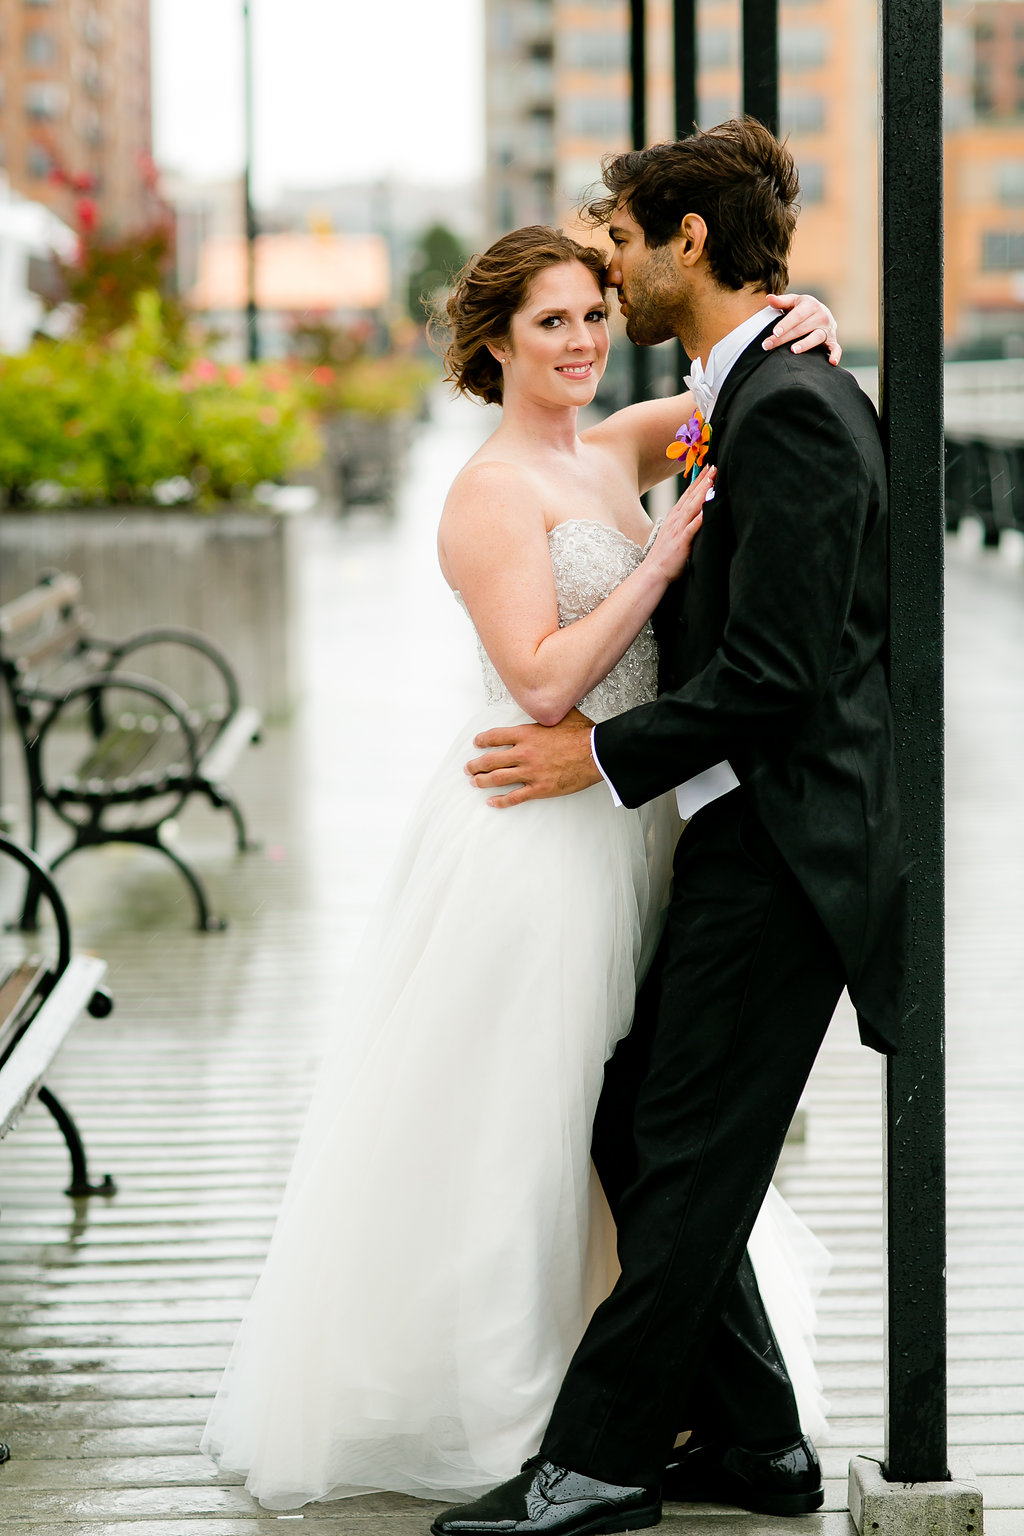 Gorgeous Rainy Day Wedding Photos - Yacht Wedding Venues